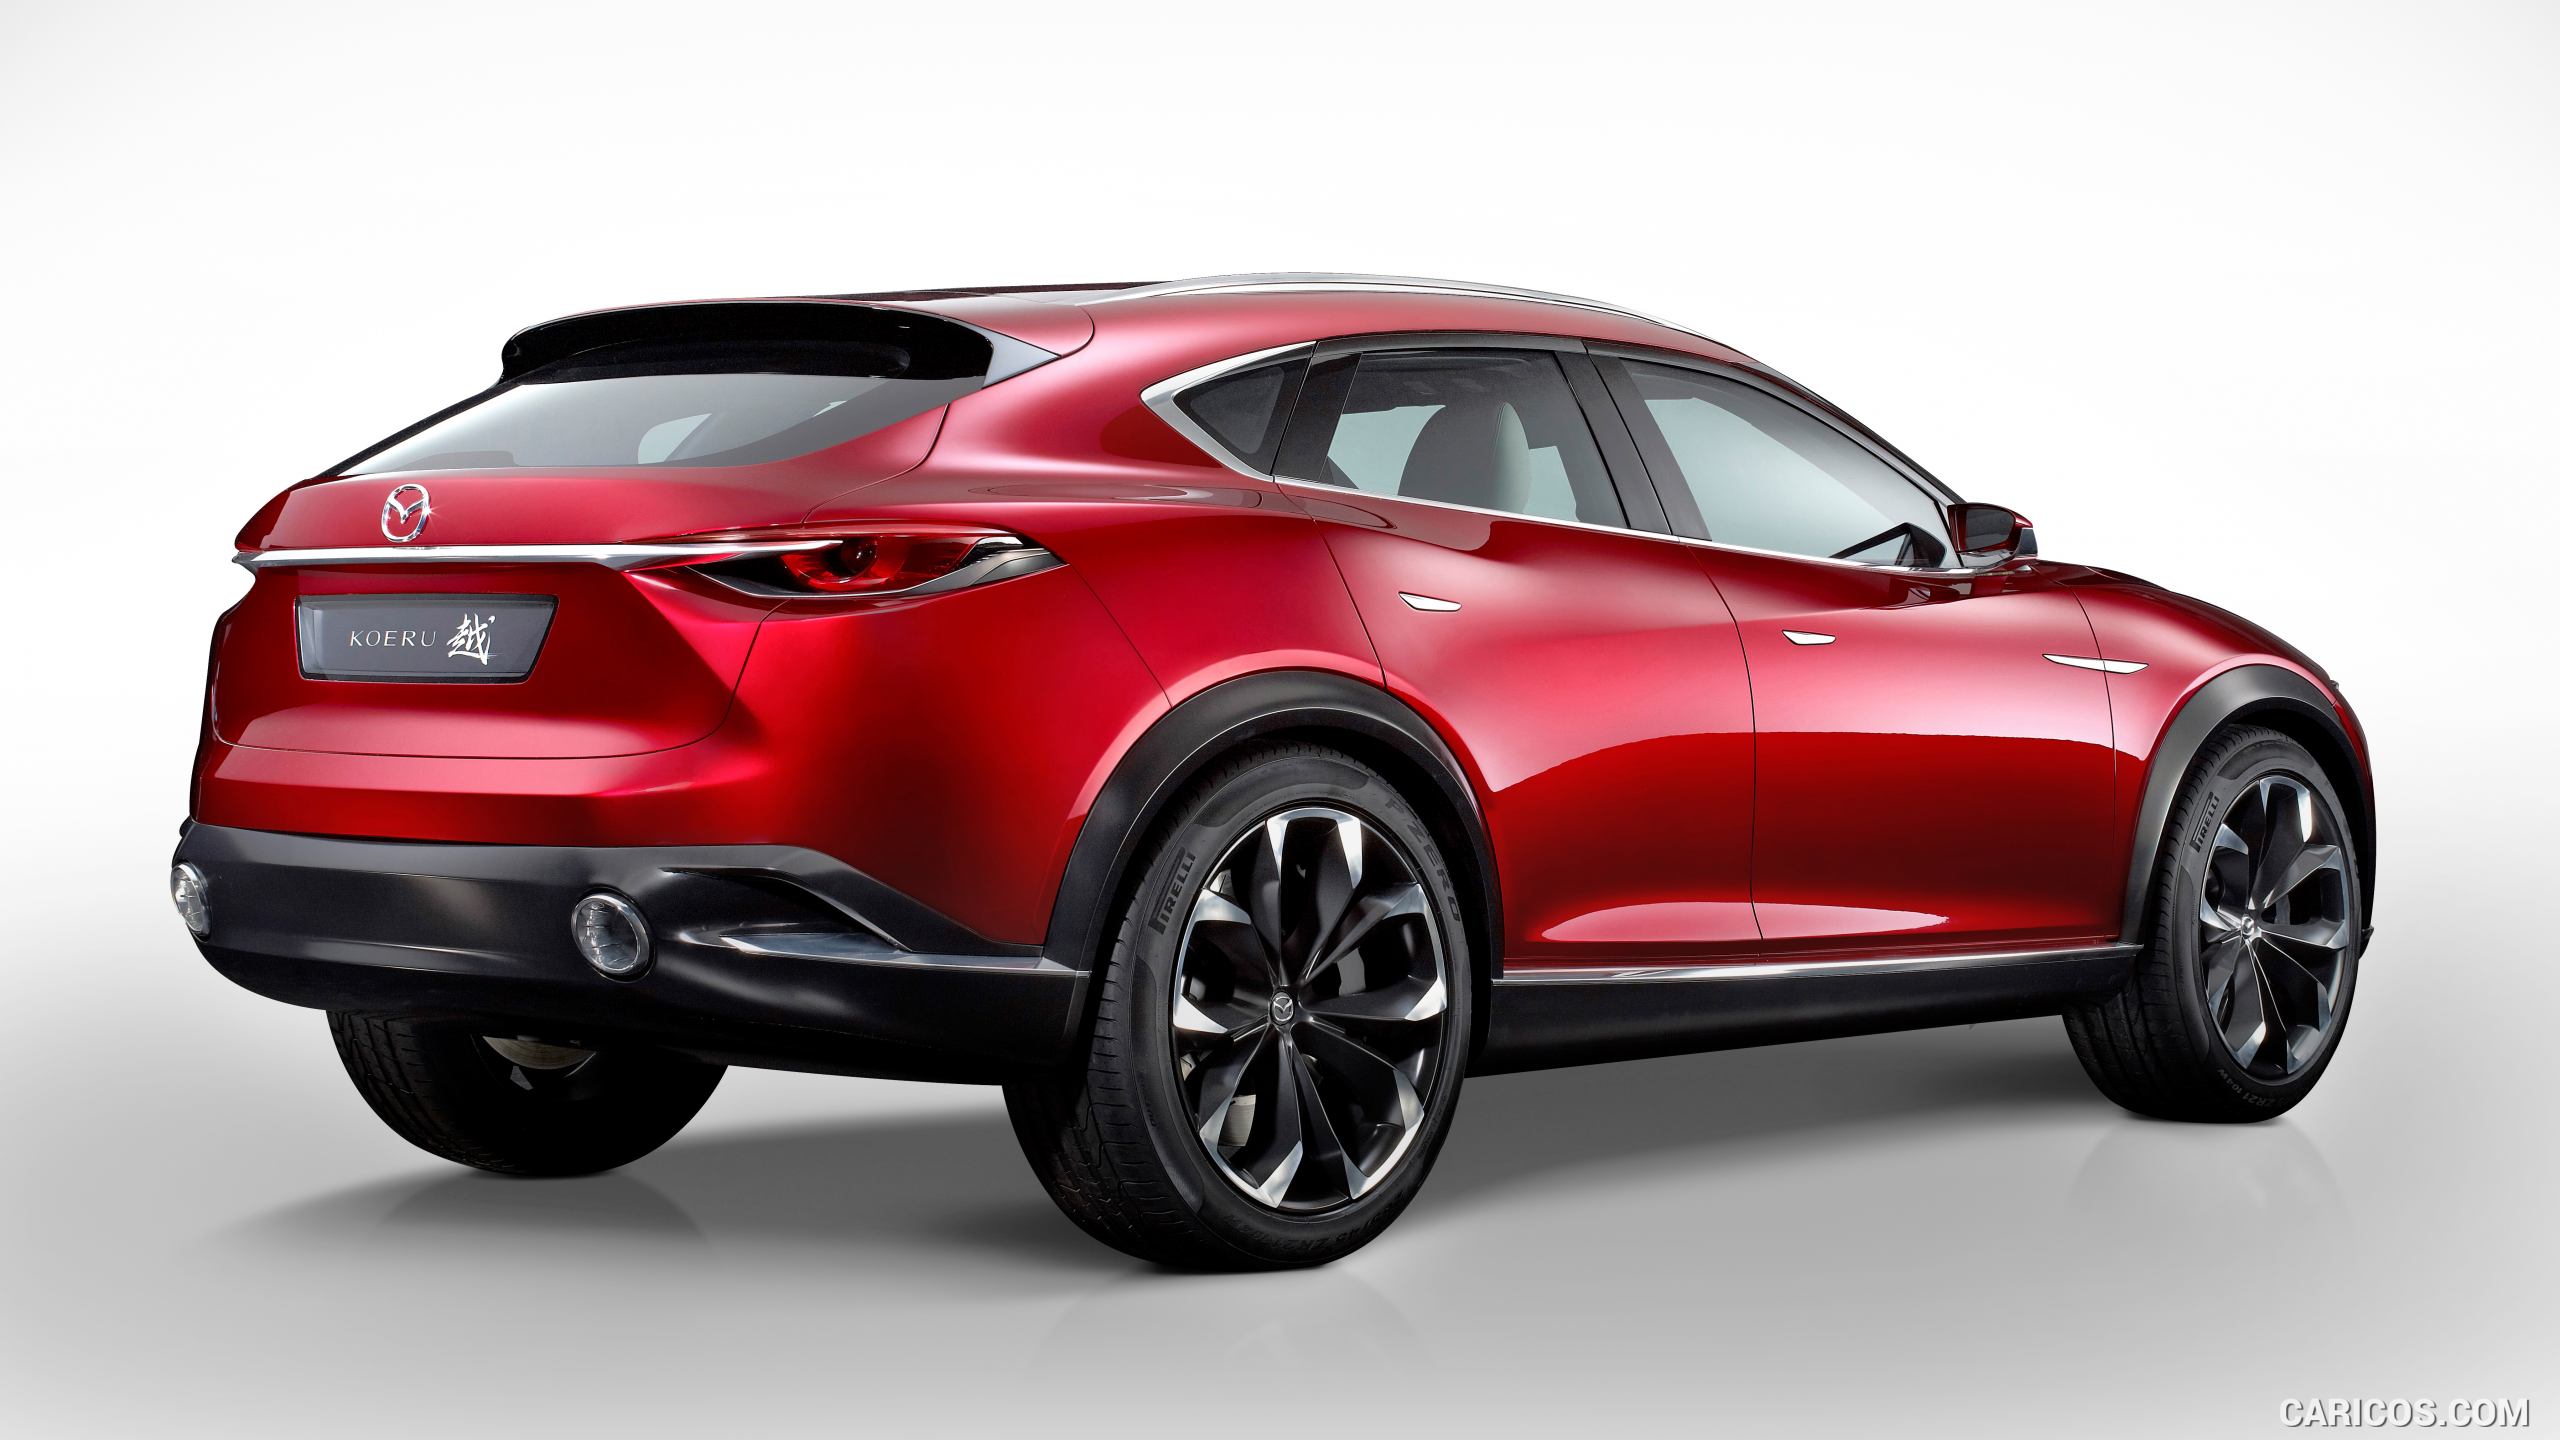 2015 Mazda Koeru Crossover Concept - Rear, #2 of 17